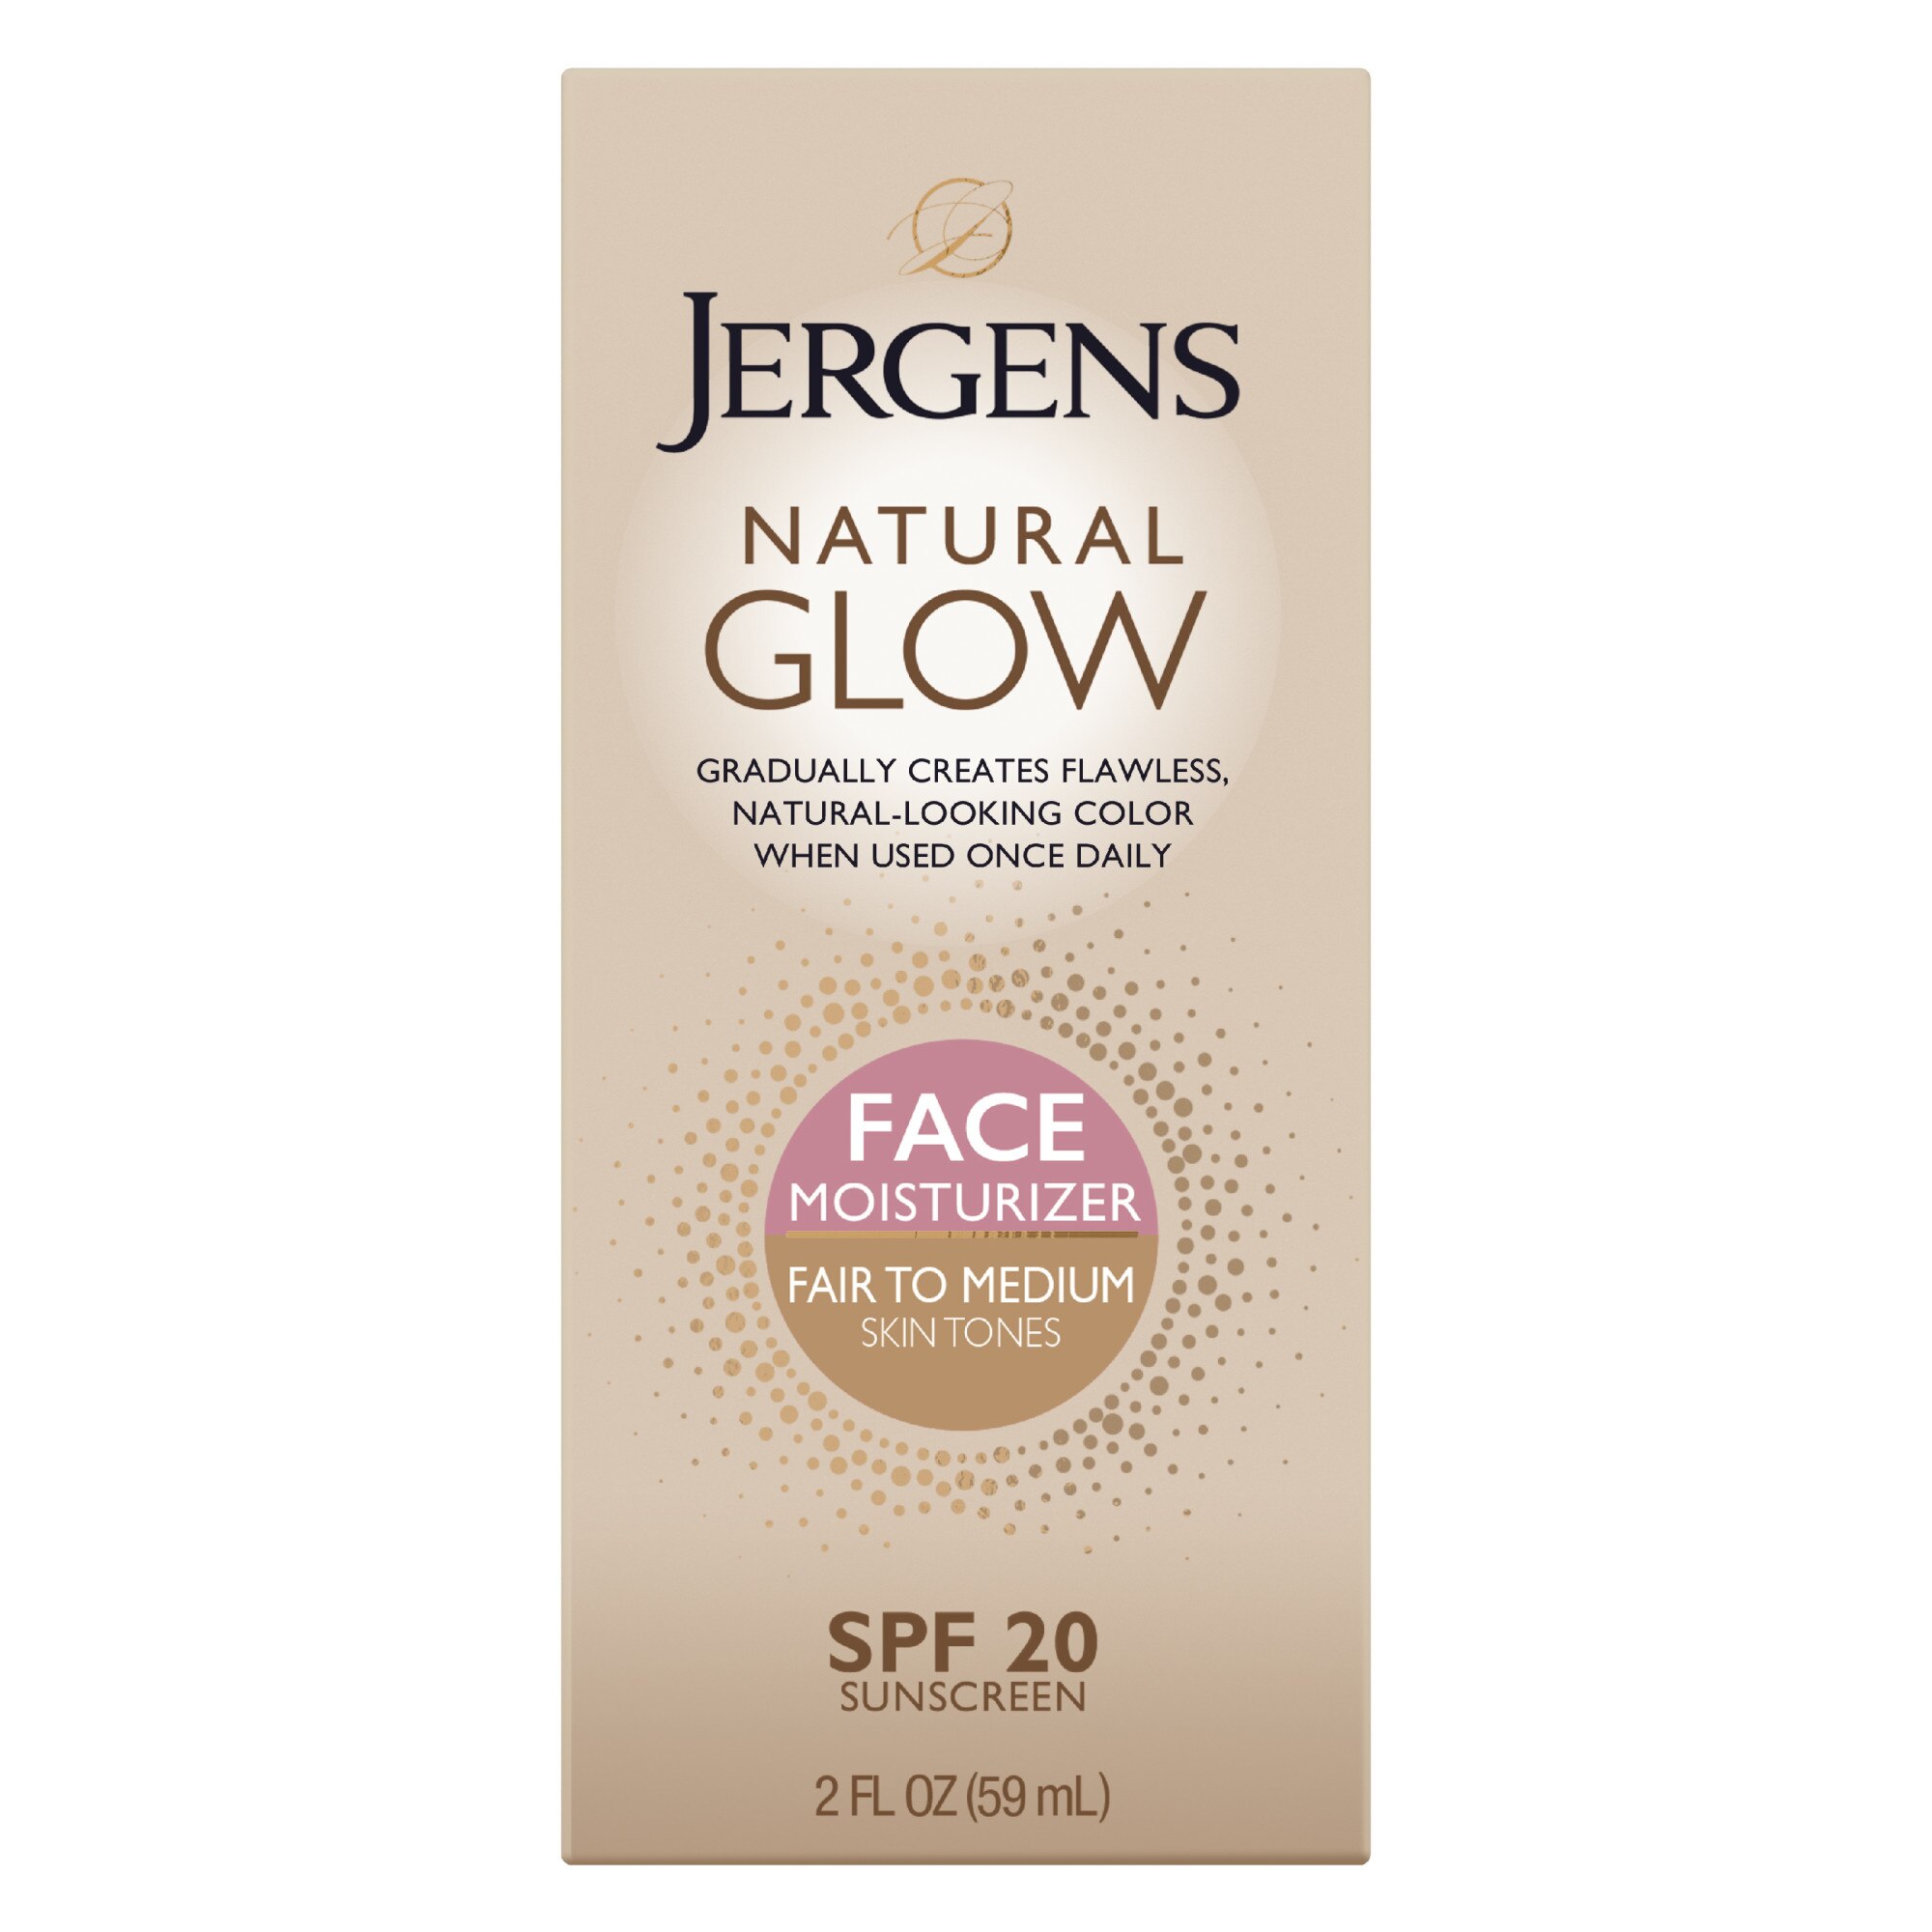 Jergens Natural Glow Face Moisturizer